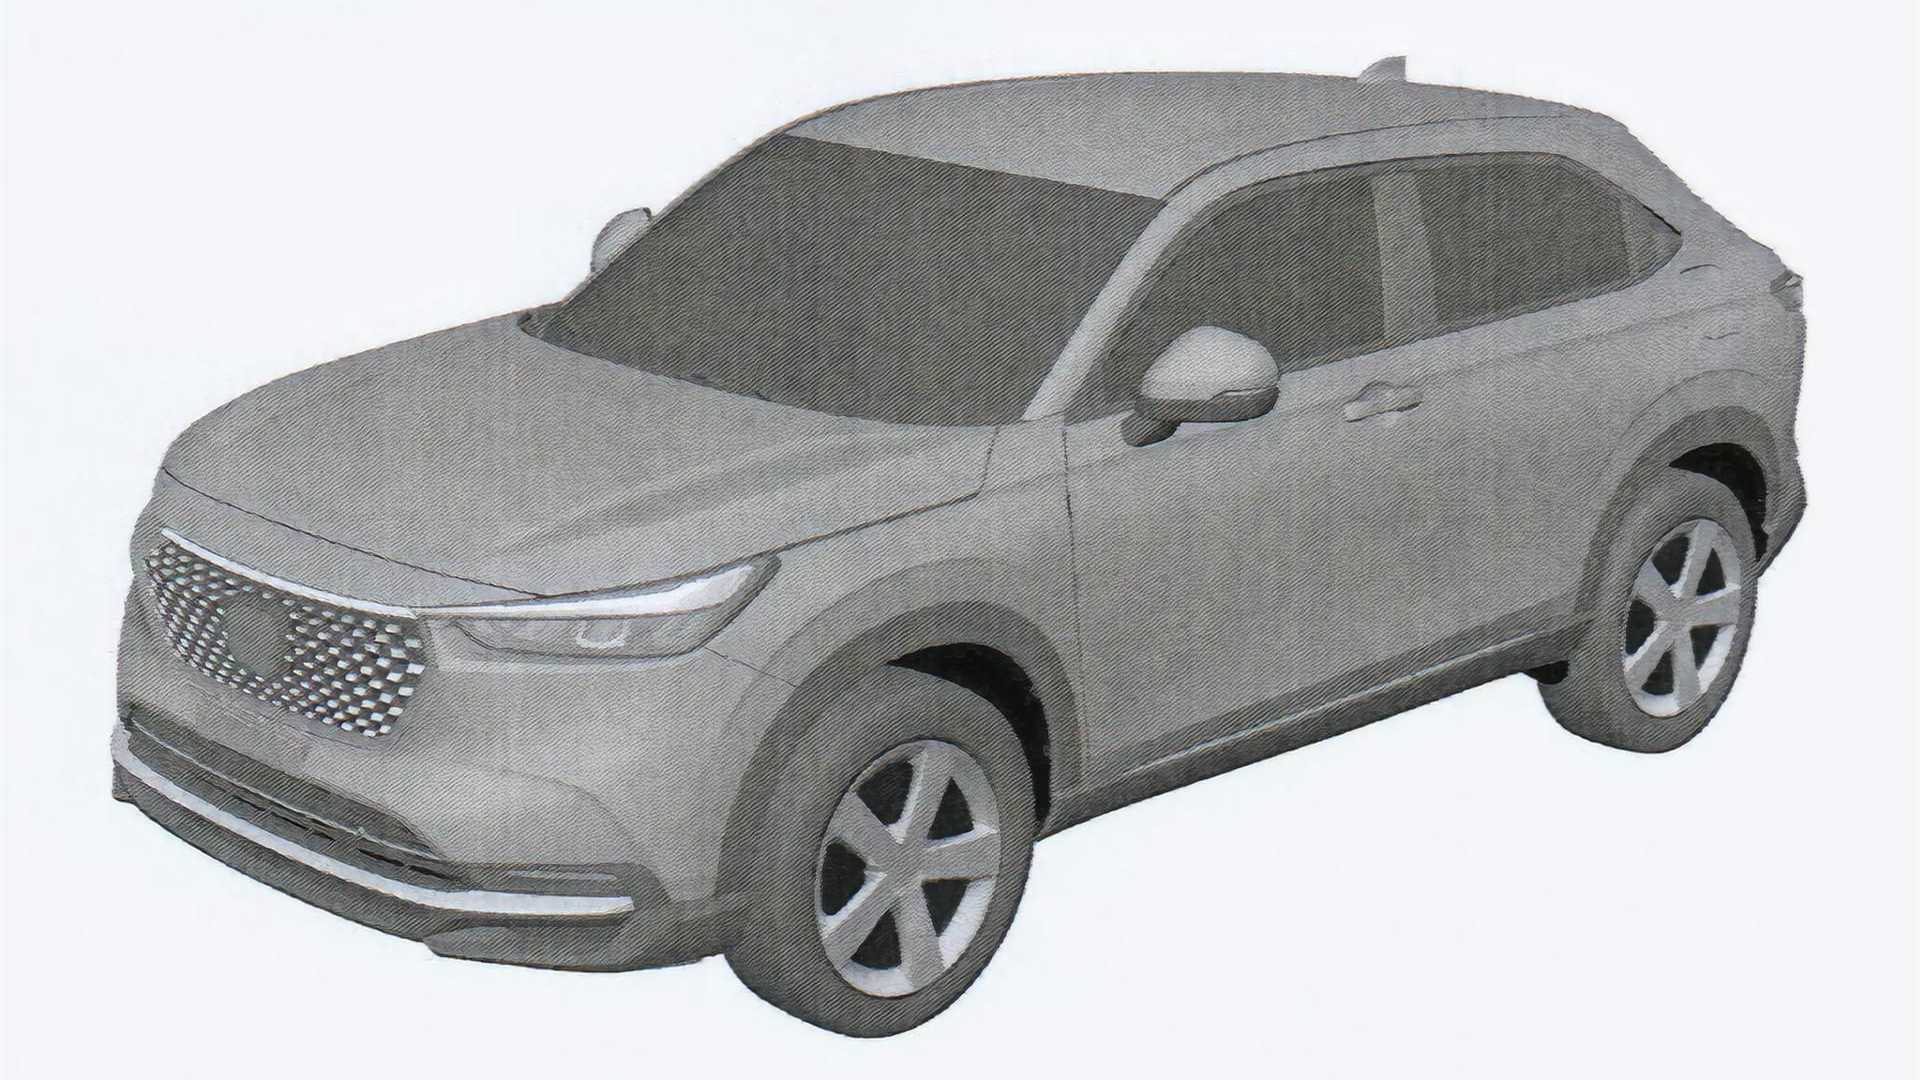 2021 Honda HR-V design exposed via patent images